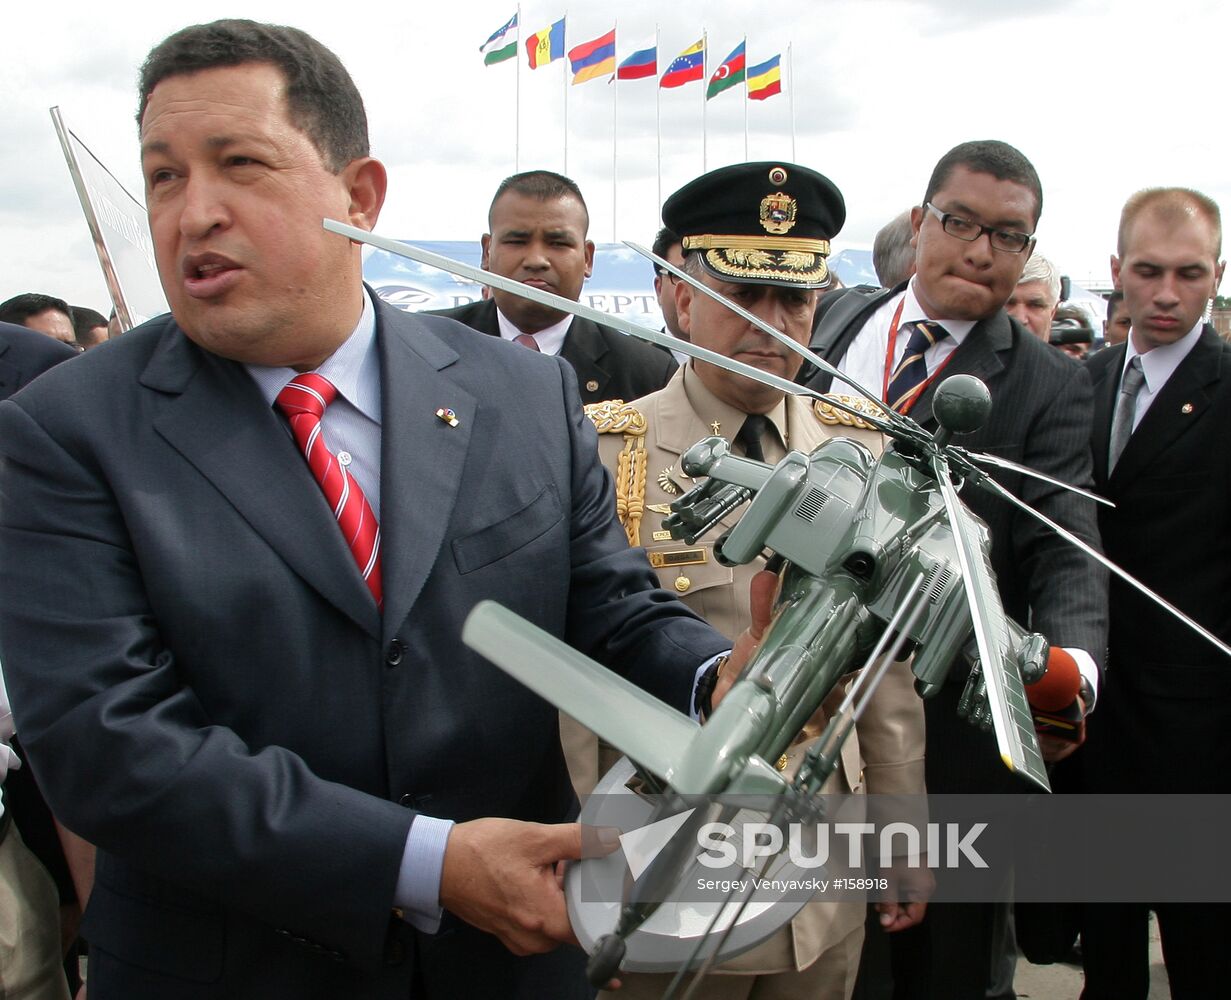 VENEZUELAN PRESIDENT HUGO CHAVEZ 